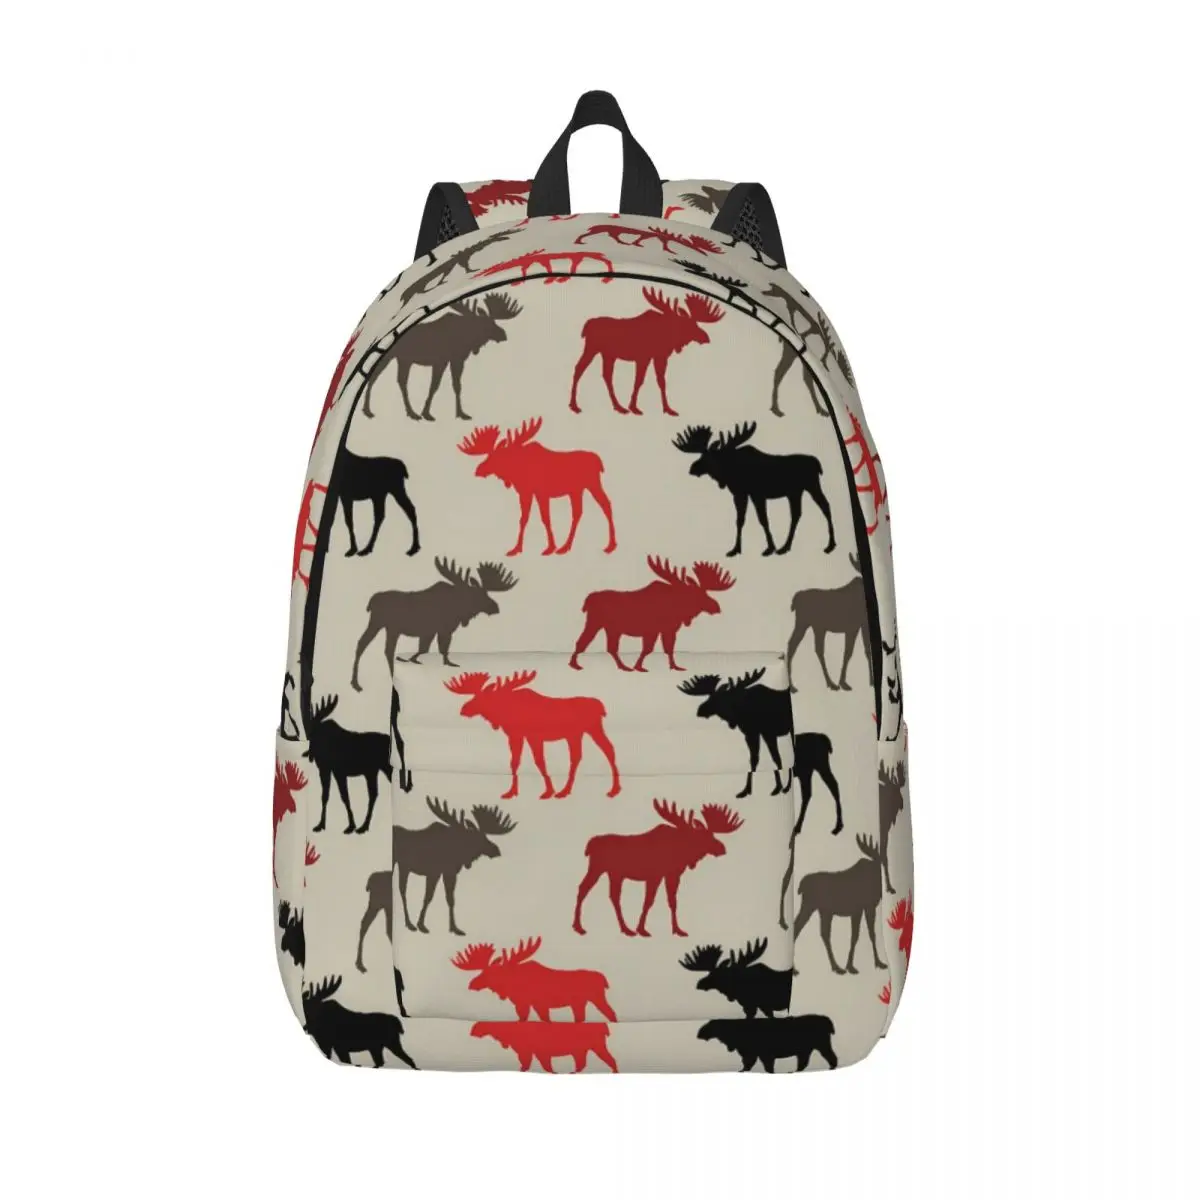 

Silhouette Deer Backpack Cute Animal Print Travel Backpacks Boy High Quality Breathable High School Bags Novelty Rucksack